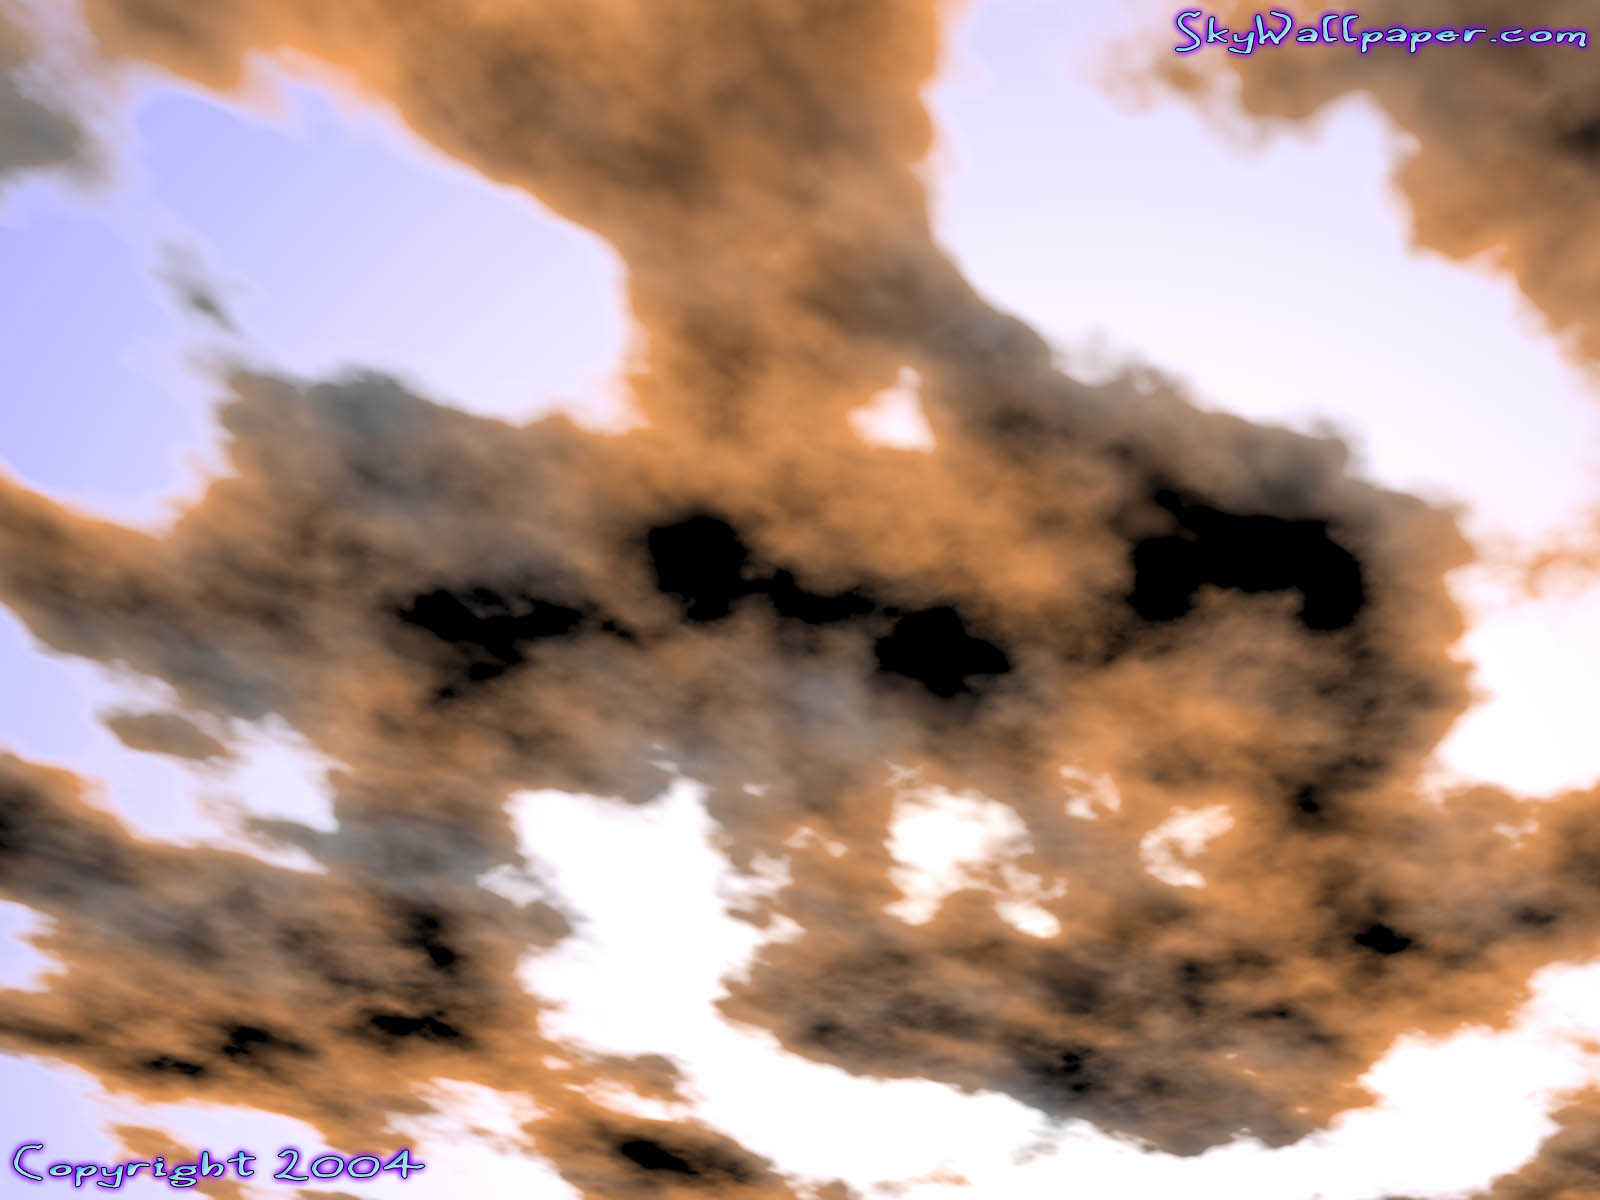 "Digital Sky Wallpaper Image" - Wallpaper No. 88 of 109. Right click for saving options.